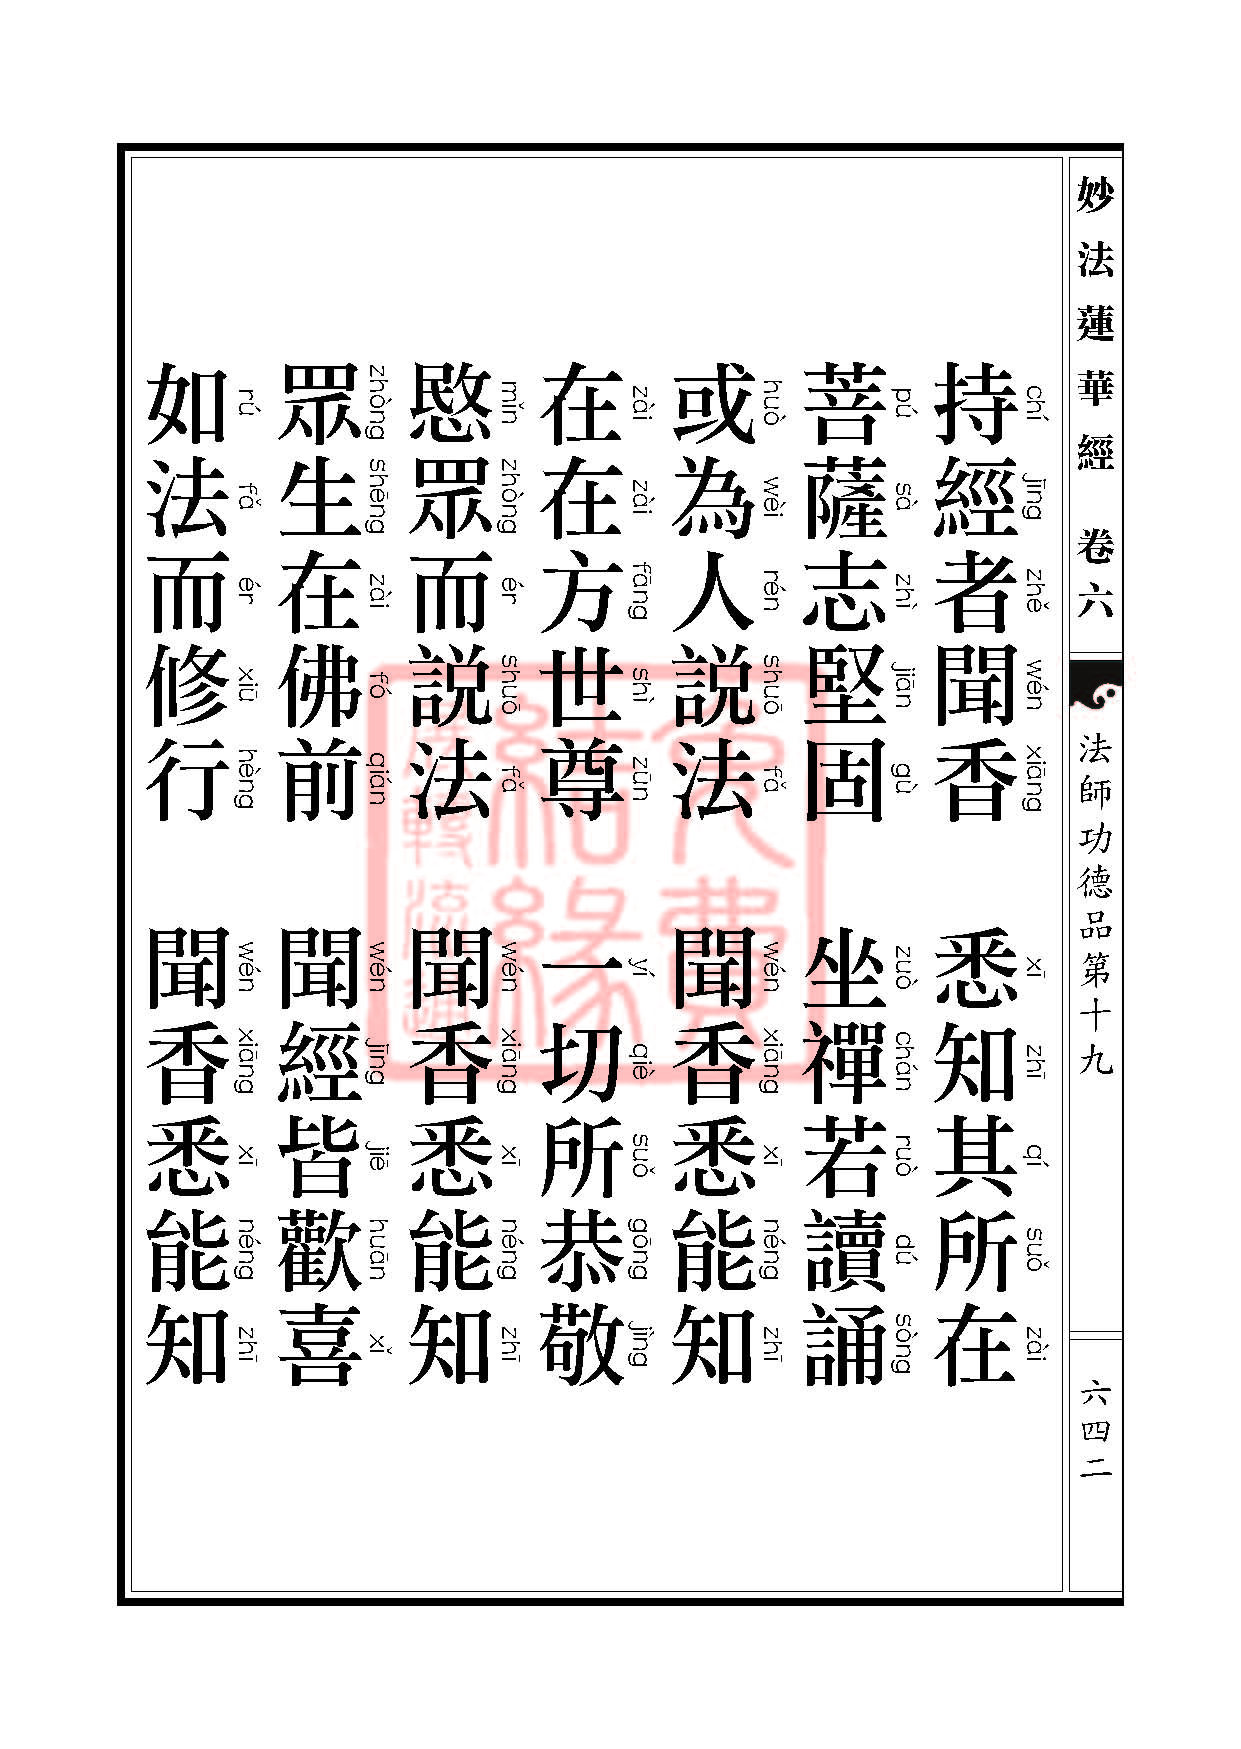 Book_FHJ_HK-A6-PY_Web_页面_642.jpg